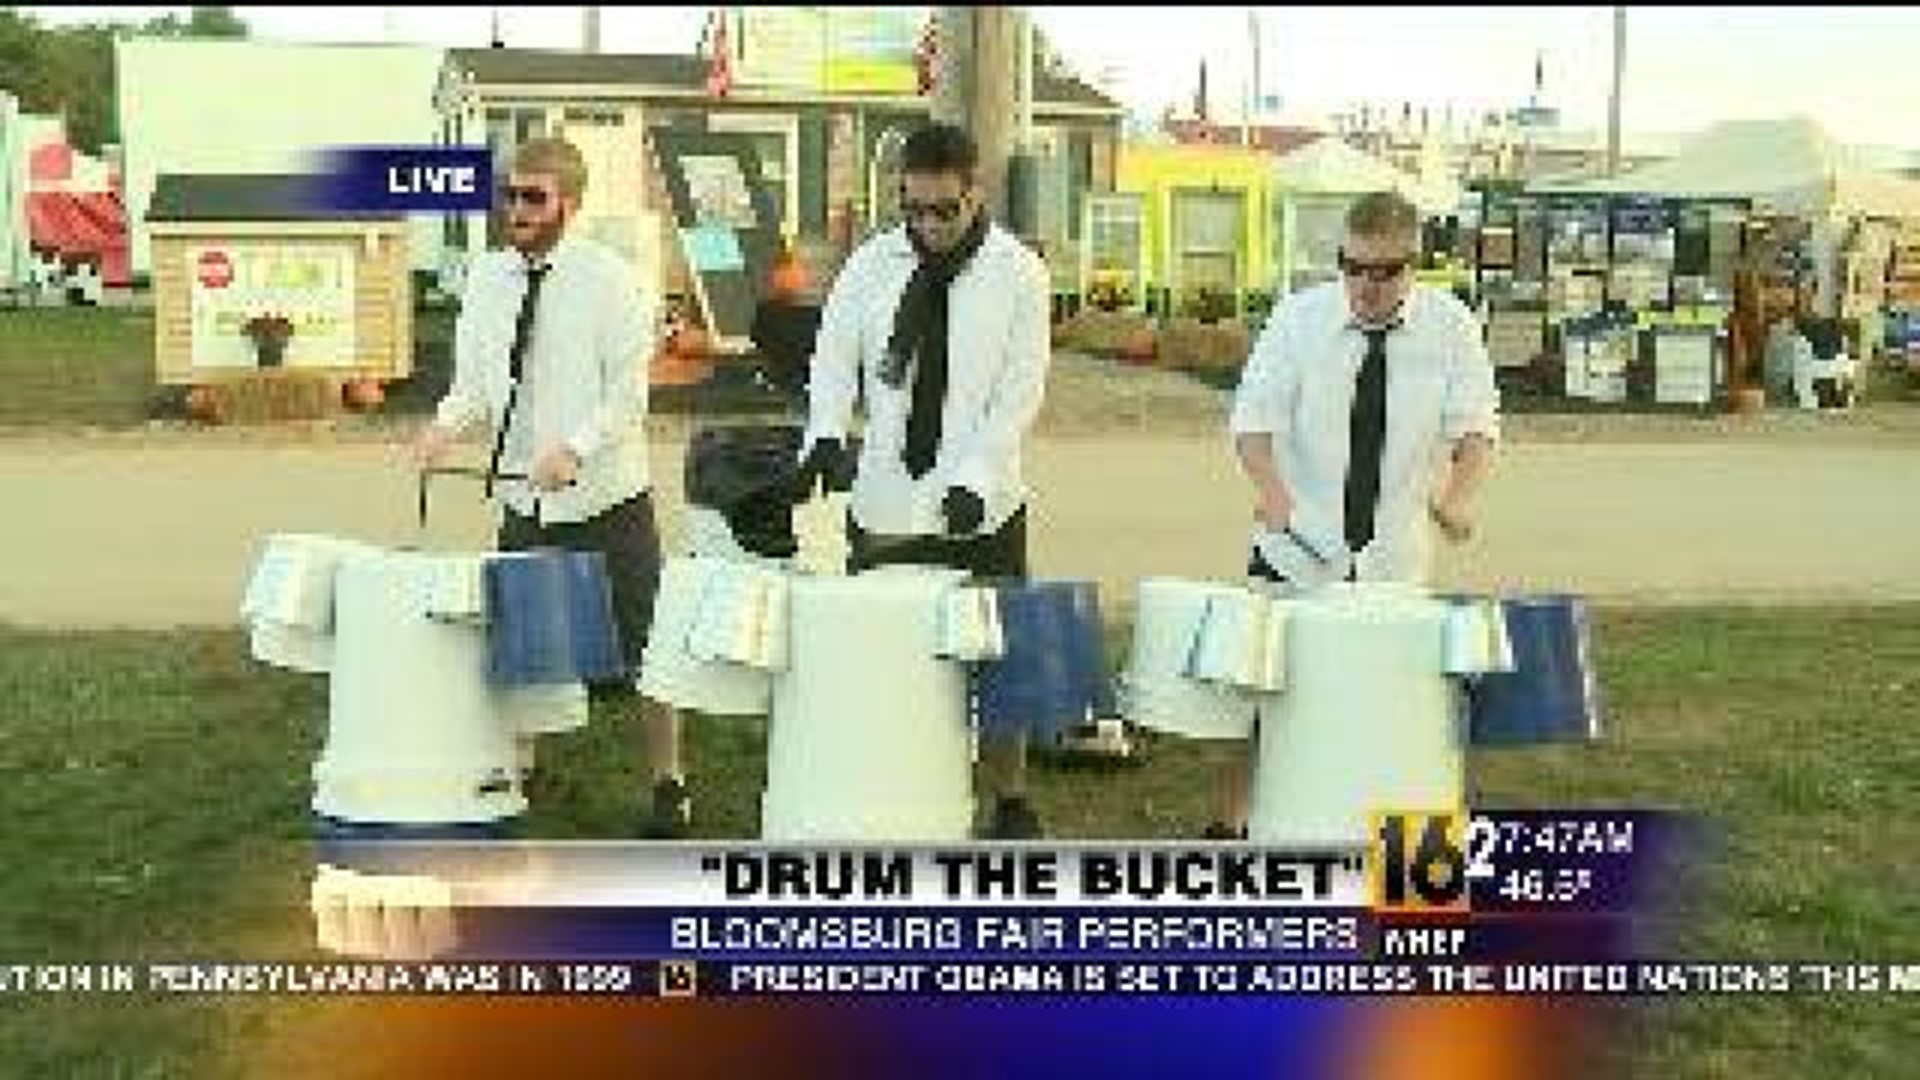 Bloomsburg Fair: Drum The Bucket